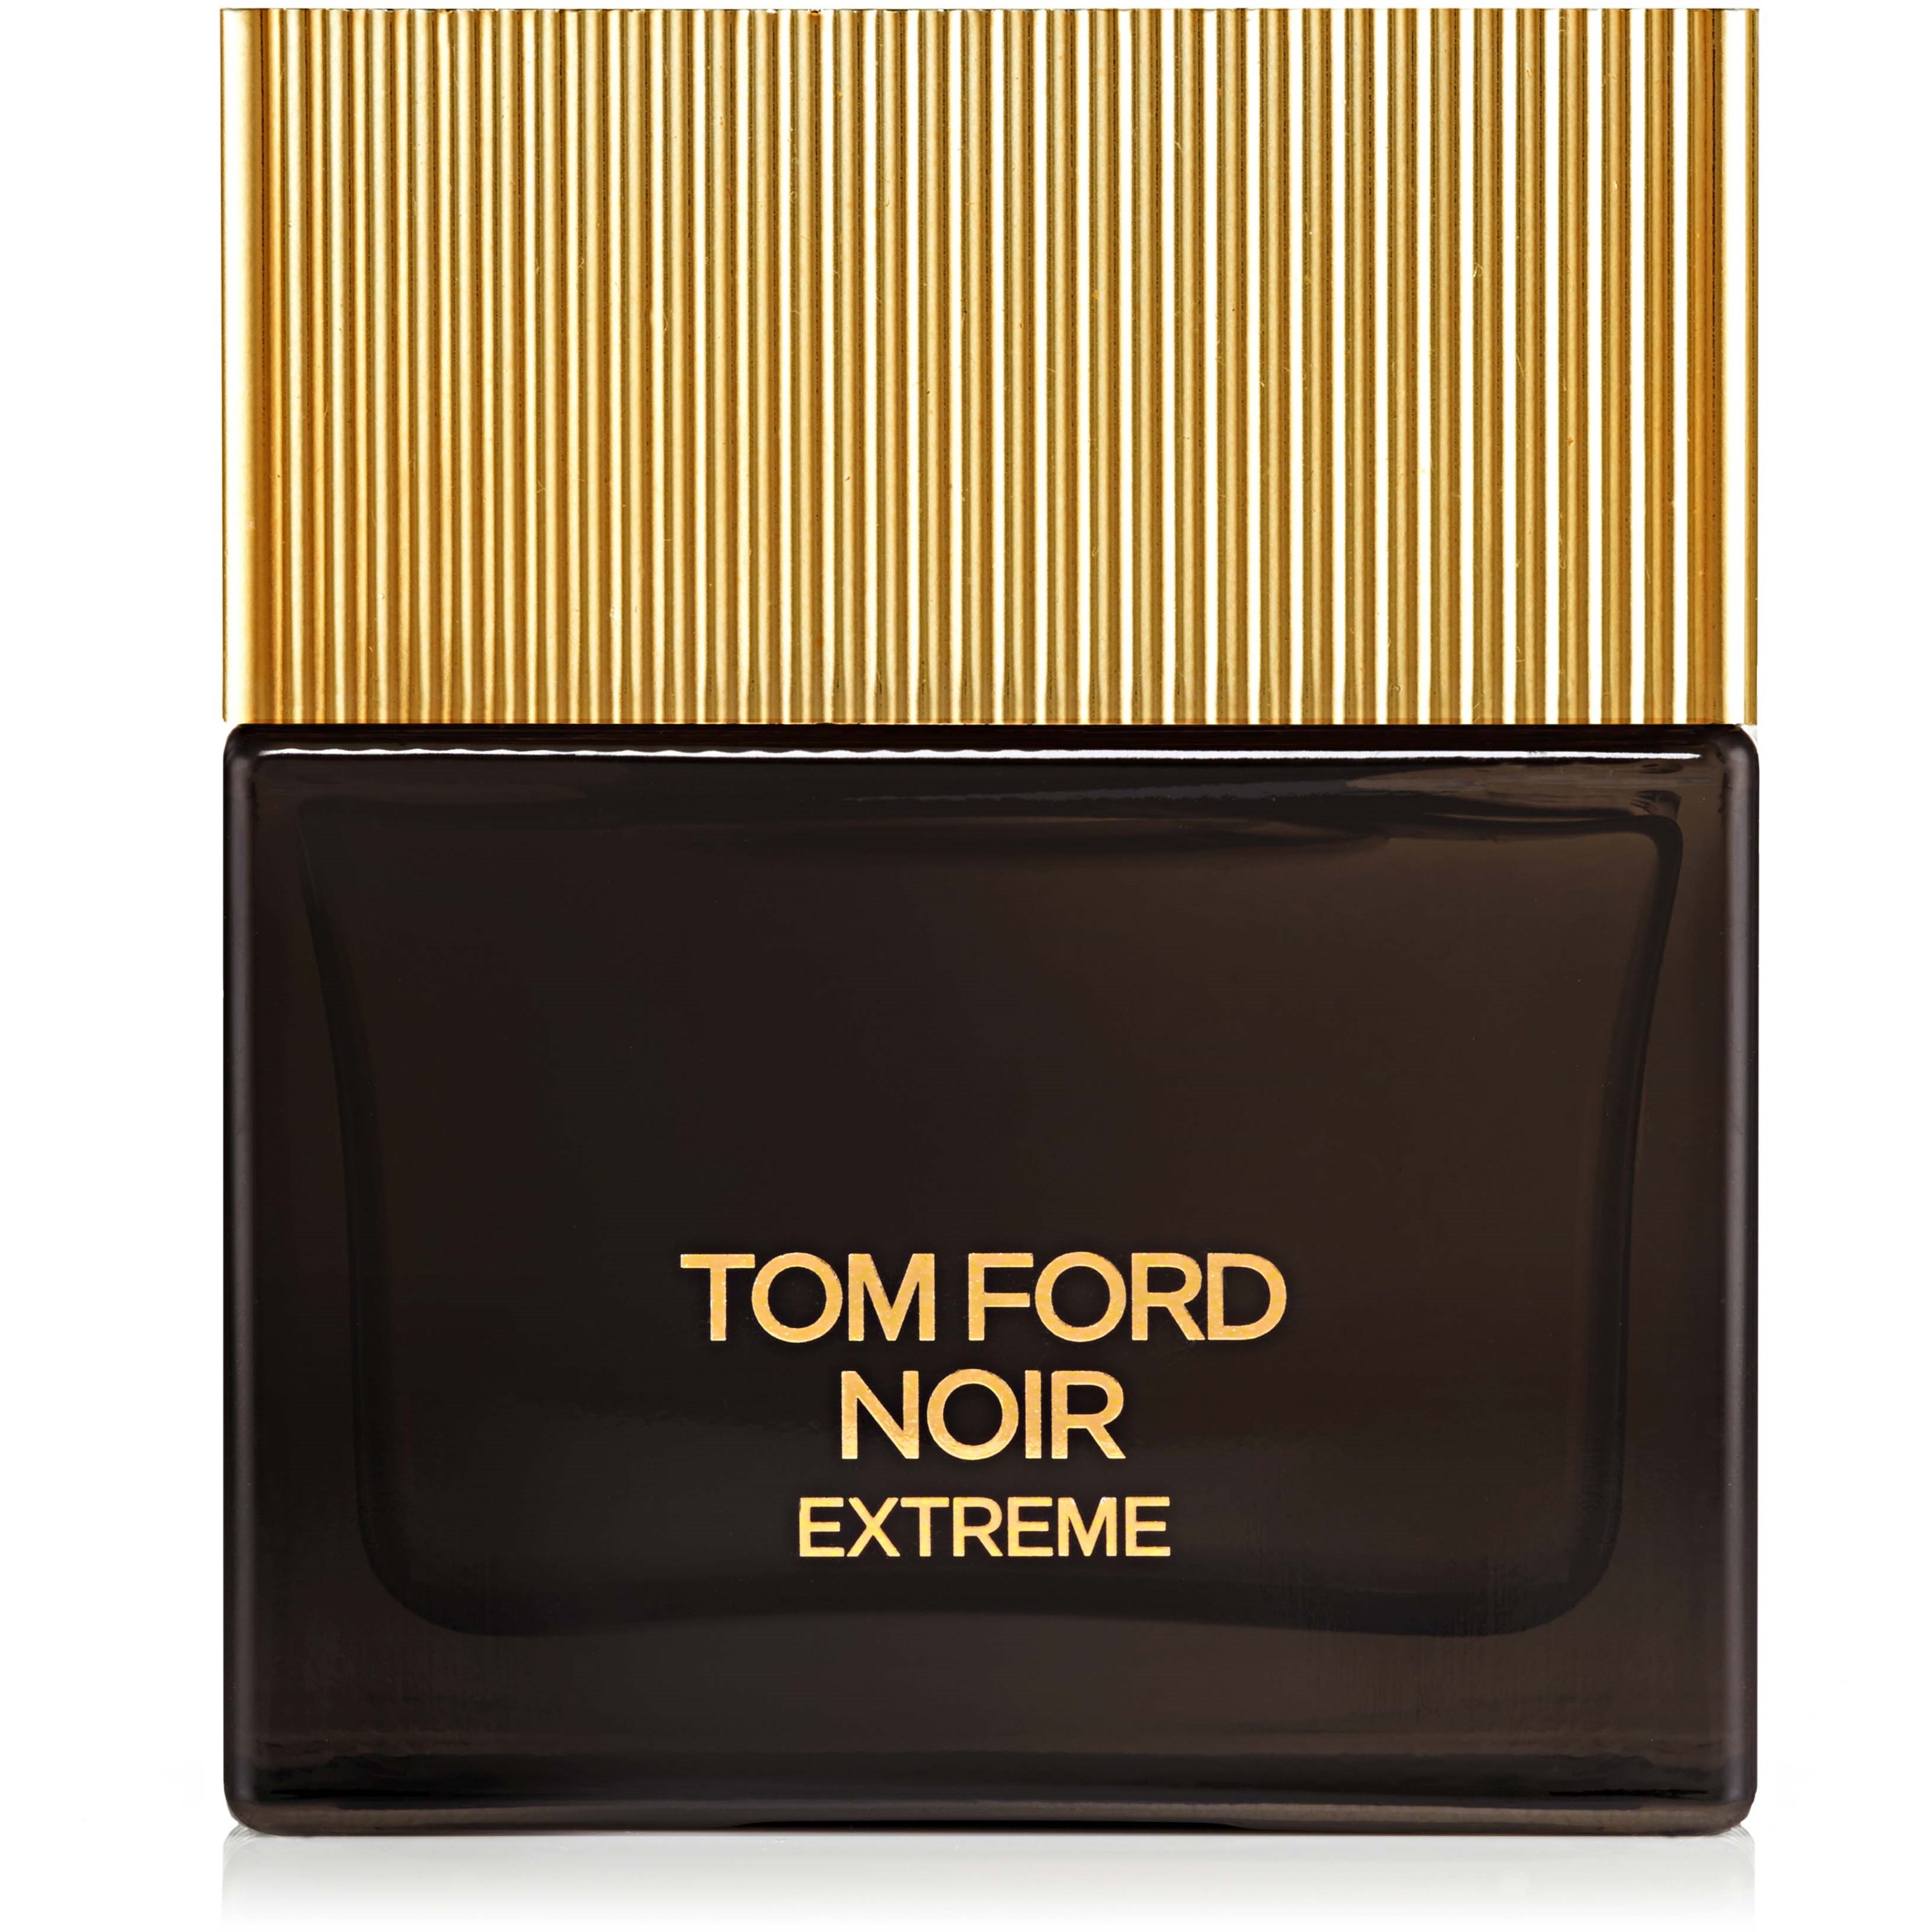 Tom Ford Noir Extreme Edp 50ml